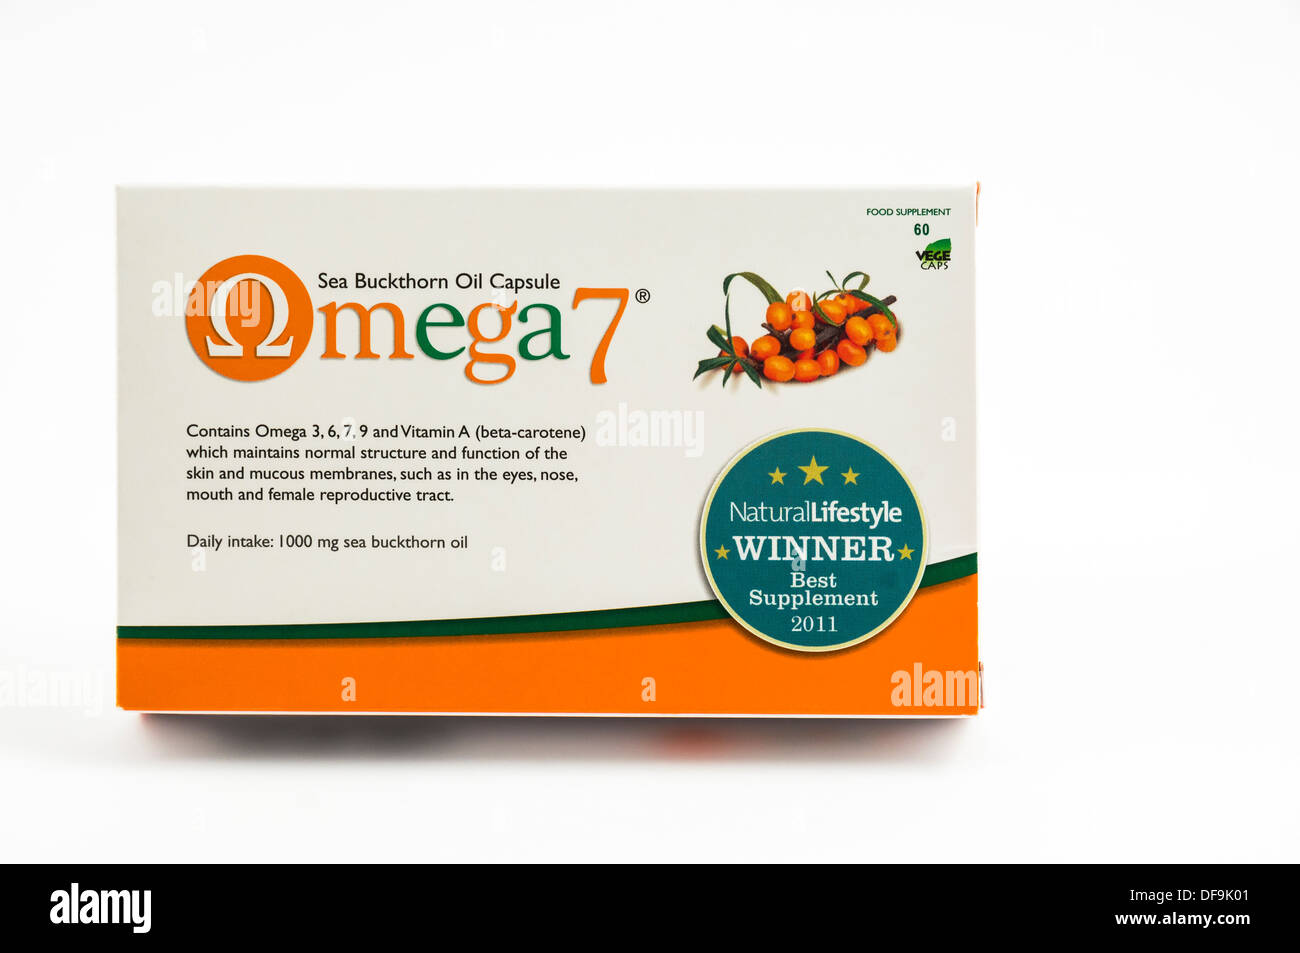 Omega 7 capsules (sea buckthorn oil). Stock Photo